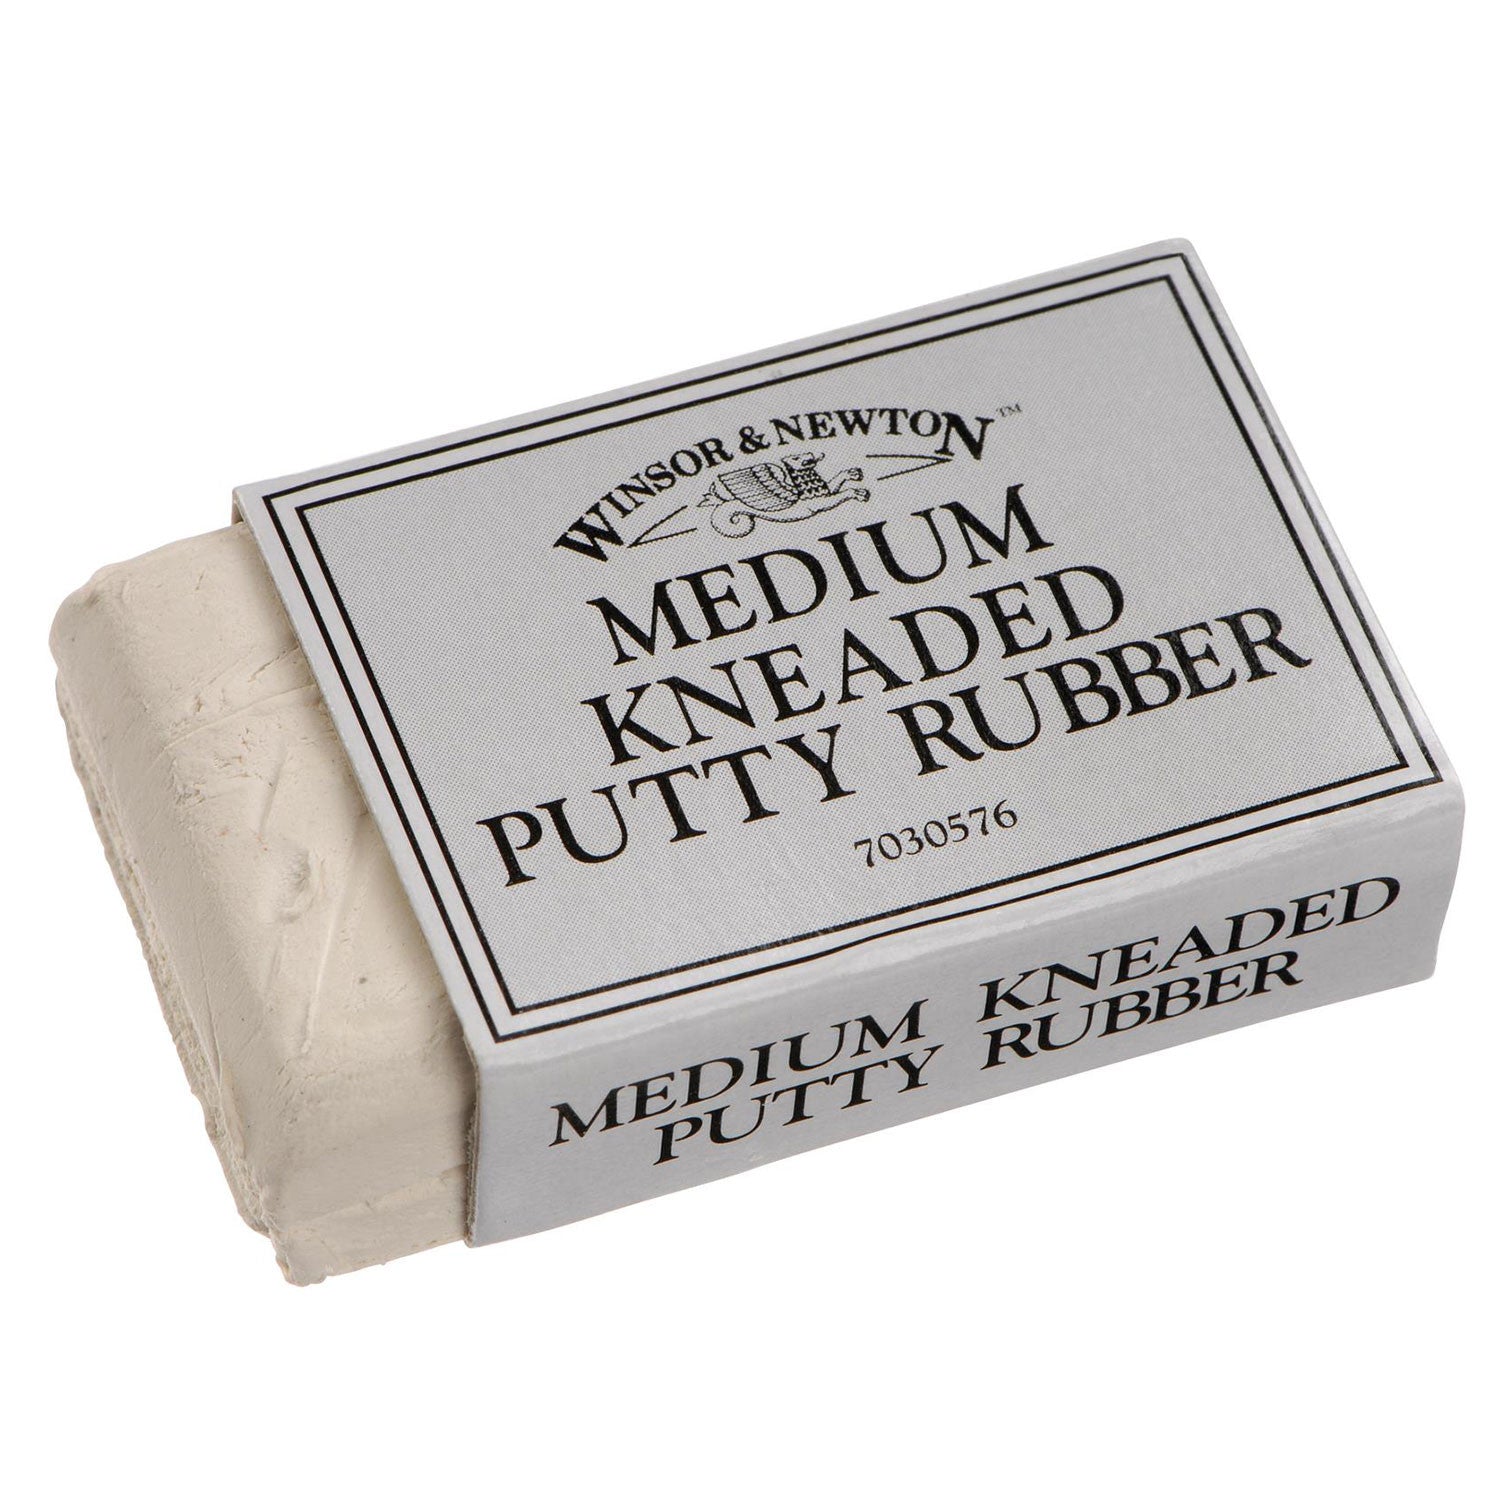 Winsor & Newton Kneaded Putty Rubber